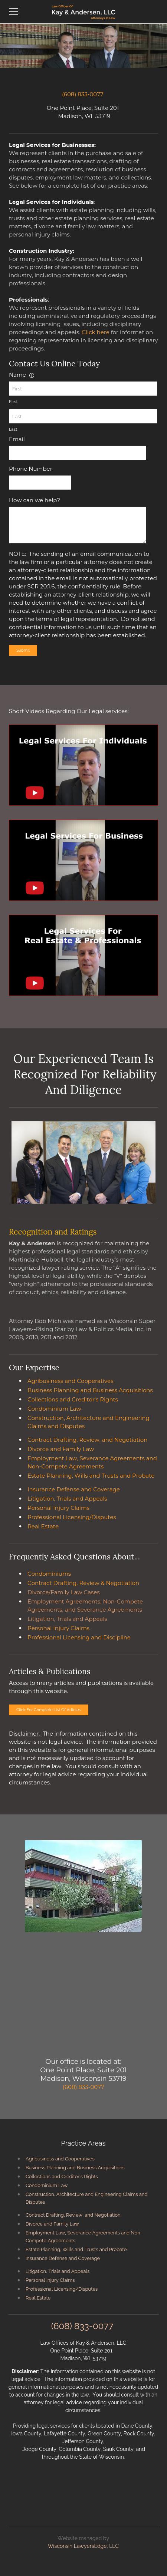 Kay & Andersen, LLC - Madison WI Lawyers